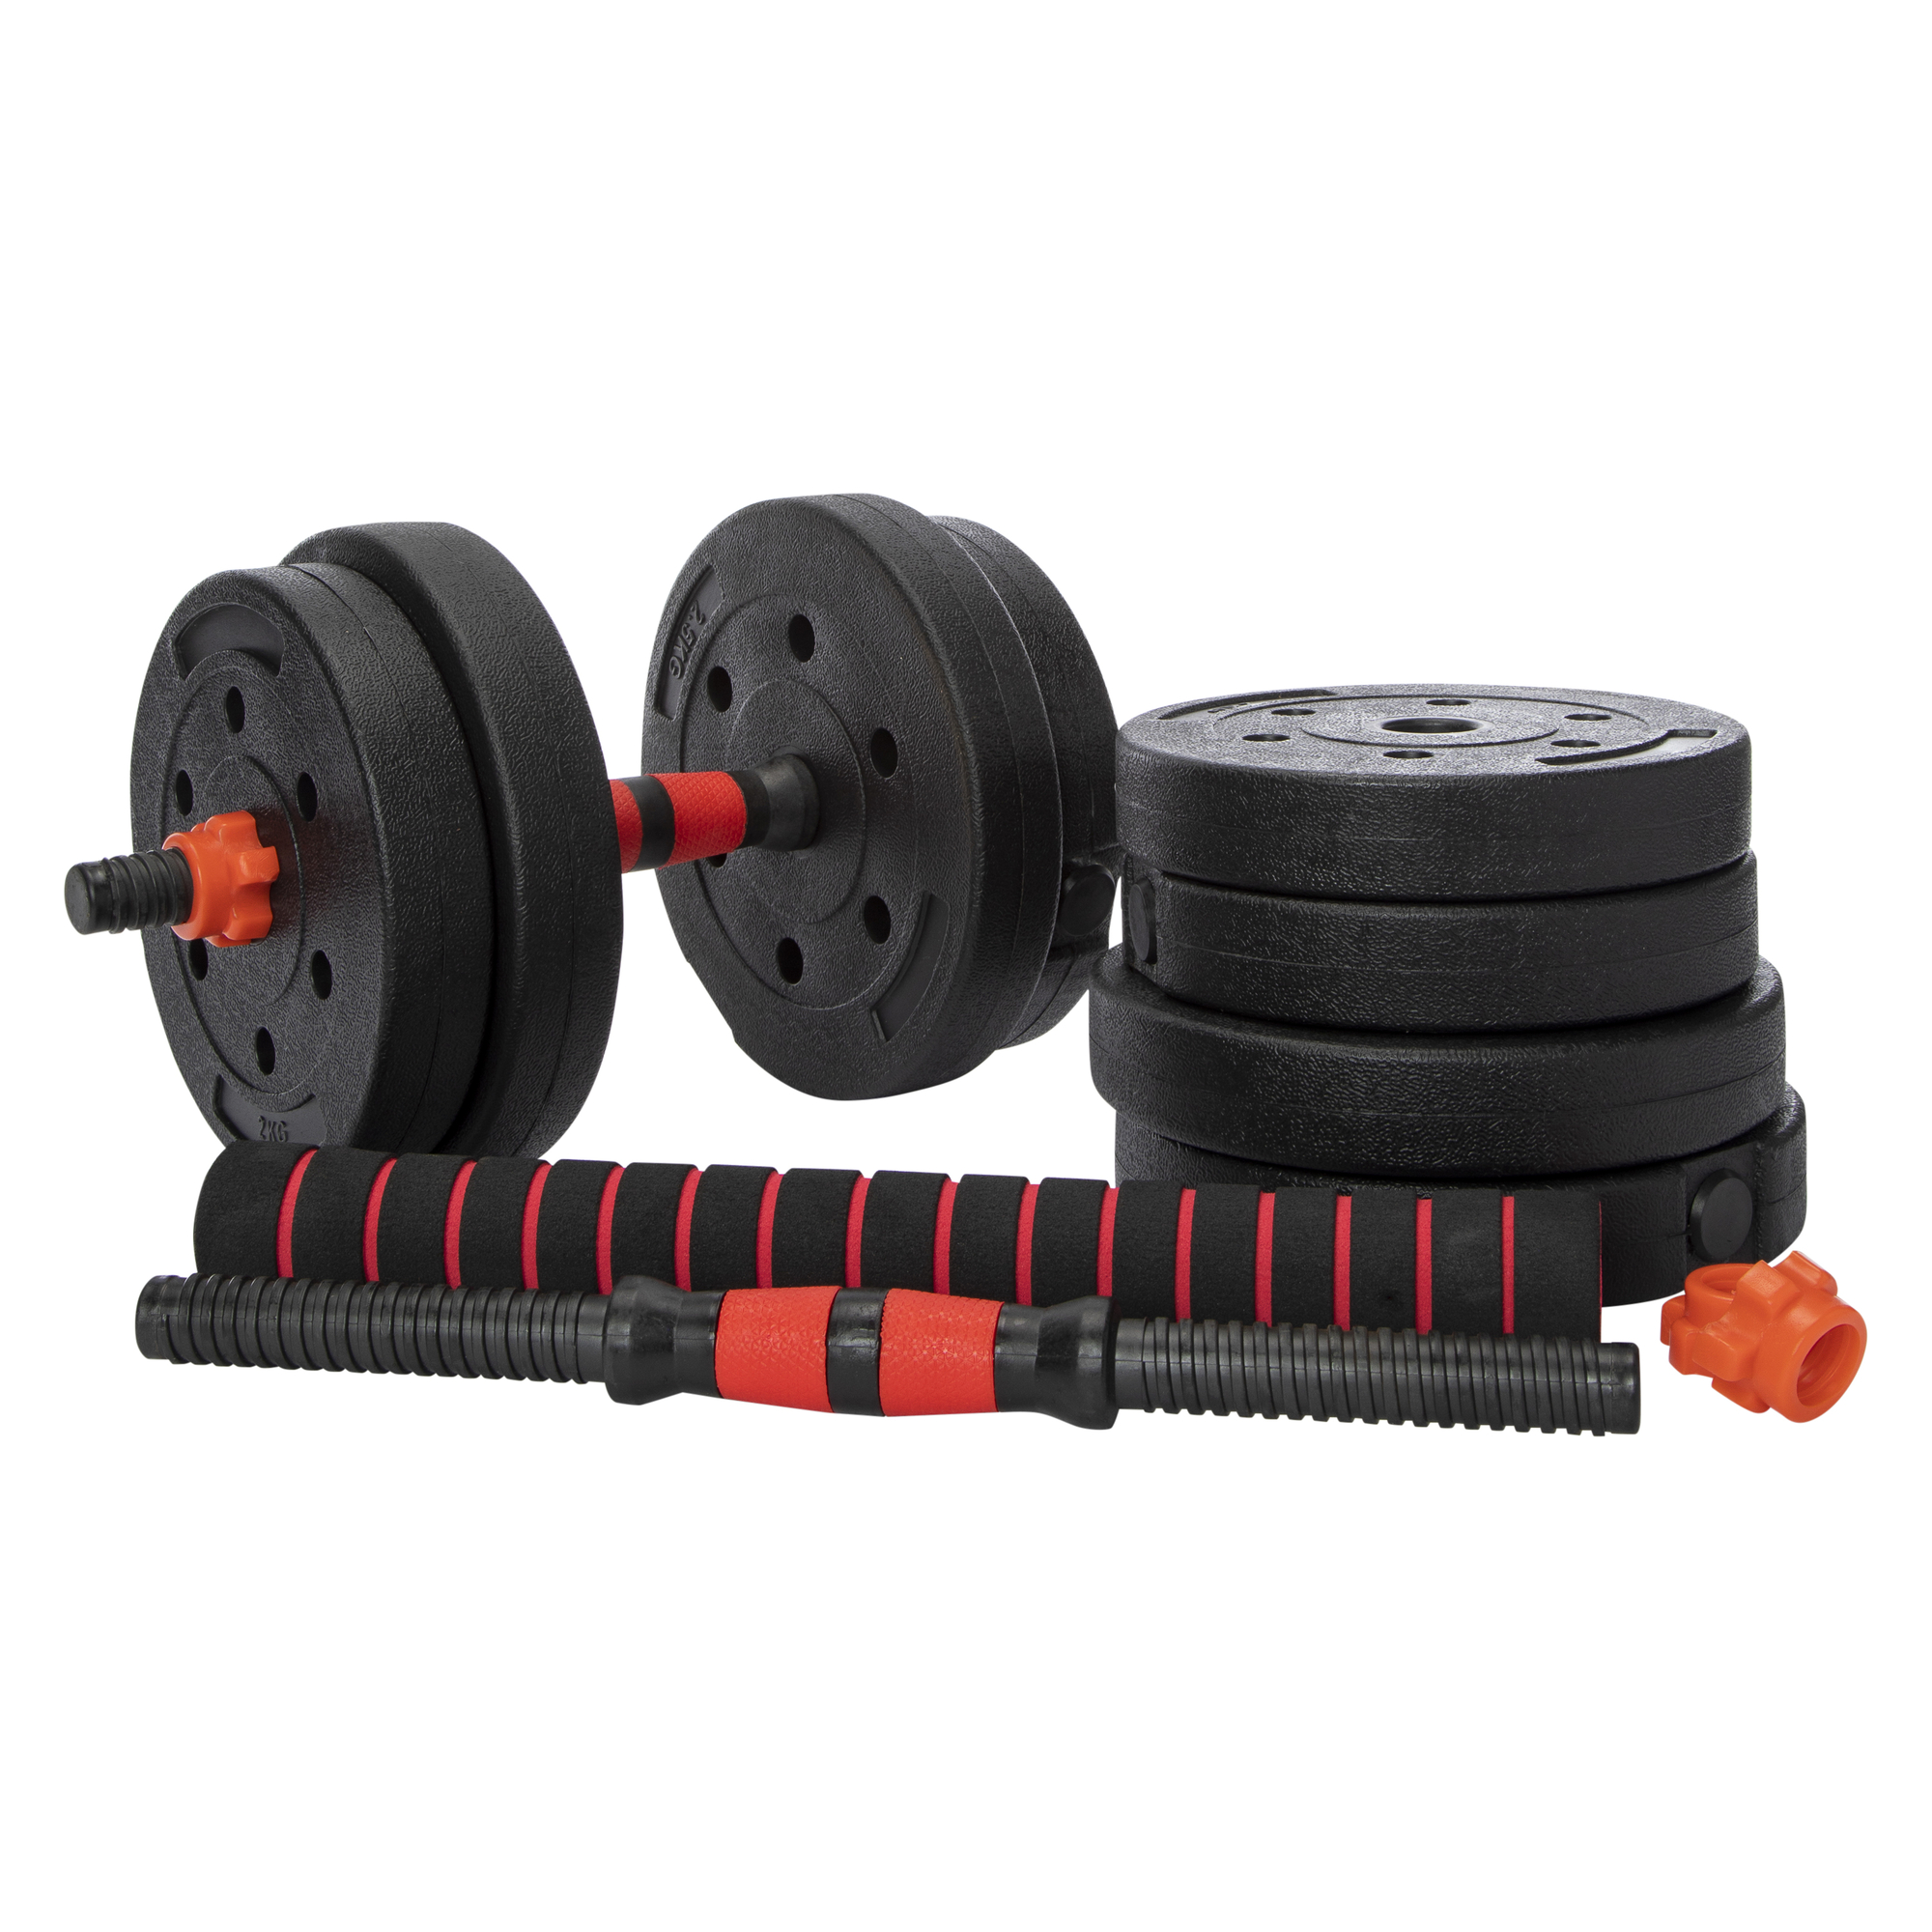 Ugnxery Adjustable Dumbbells Set, Hand Weights Set with 4 Adjustable  Weights 2lb 3lb 4lb 5lb, Adjustable Weight Dumbbells for Women/Men Home Gym